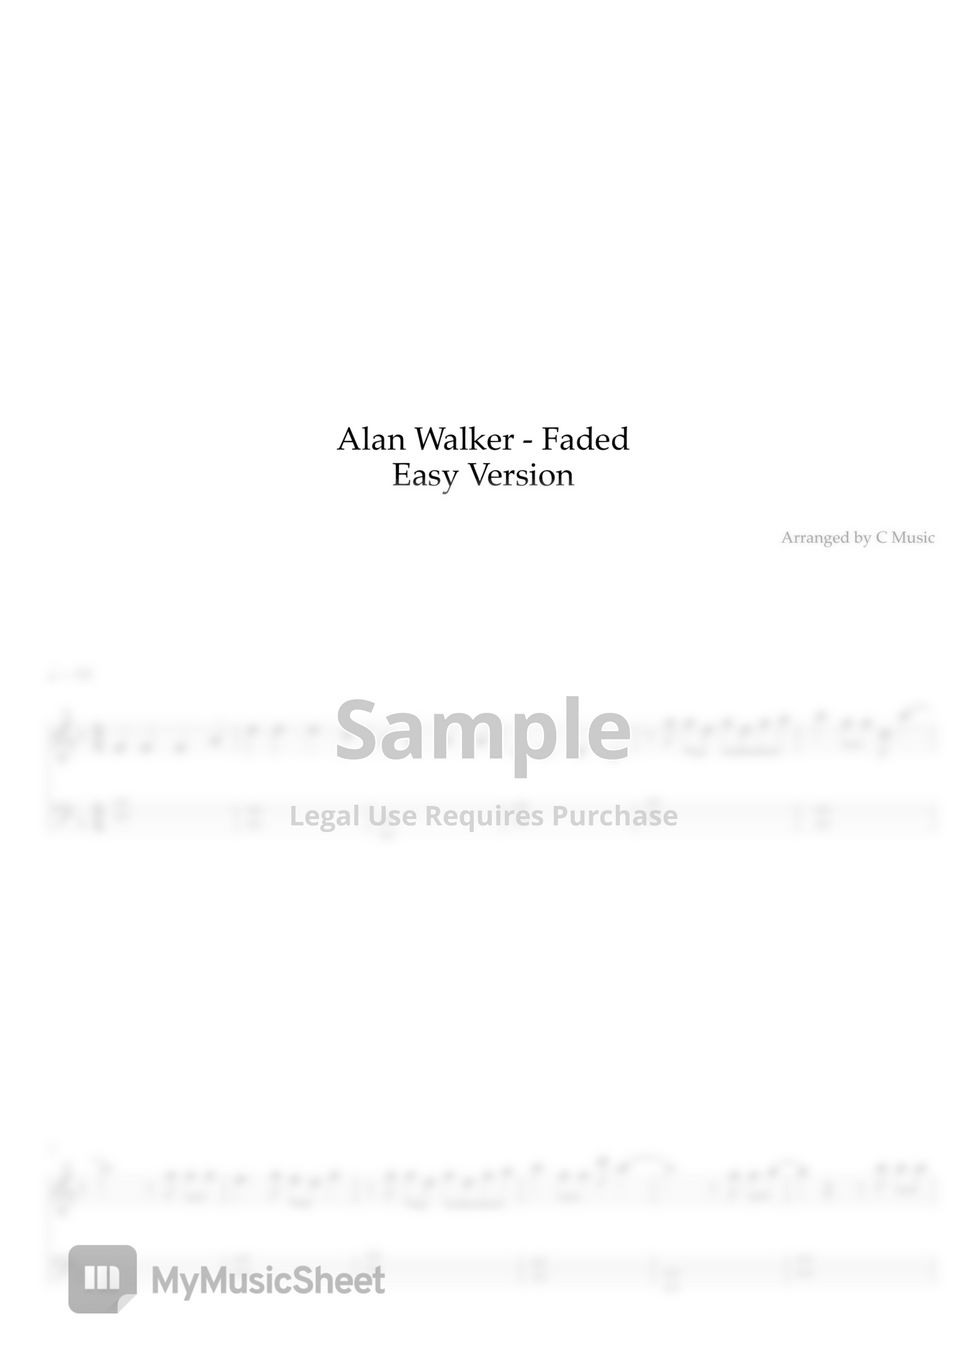 Alan Walker - Faded (Easy Version) by C Music